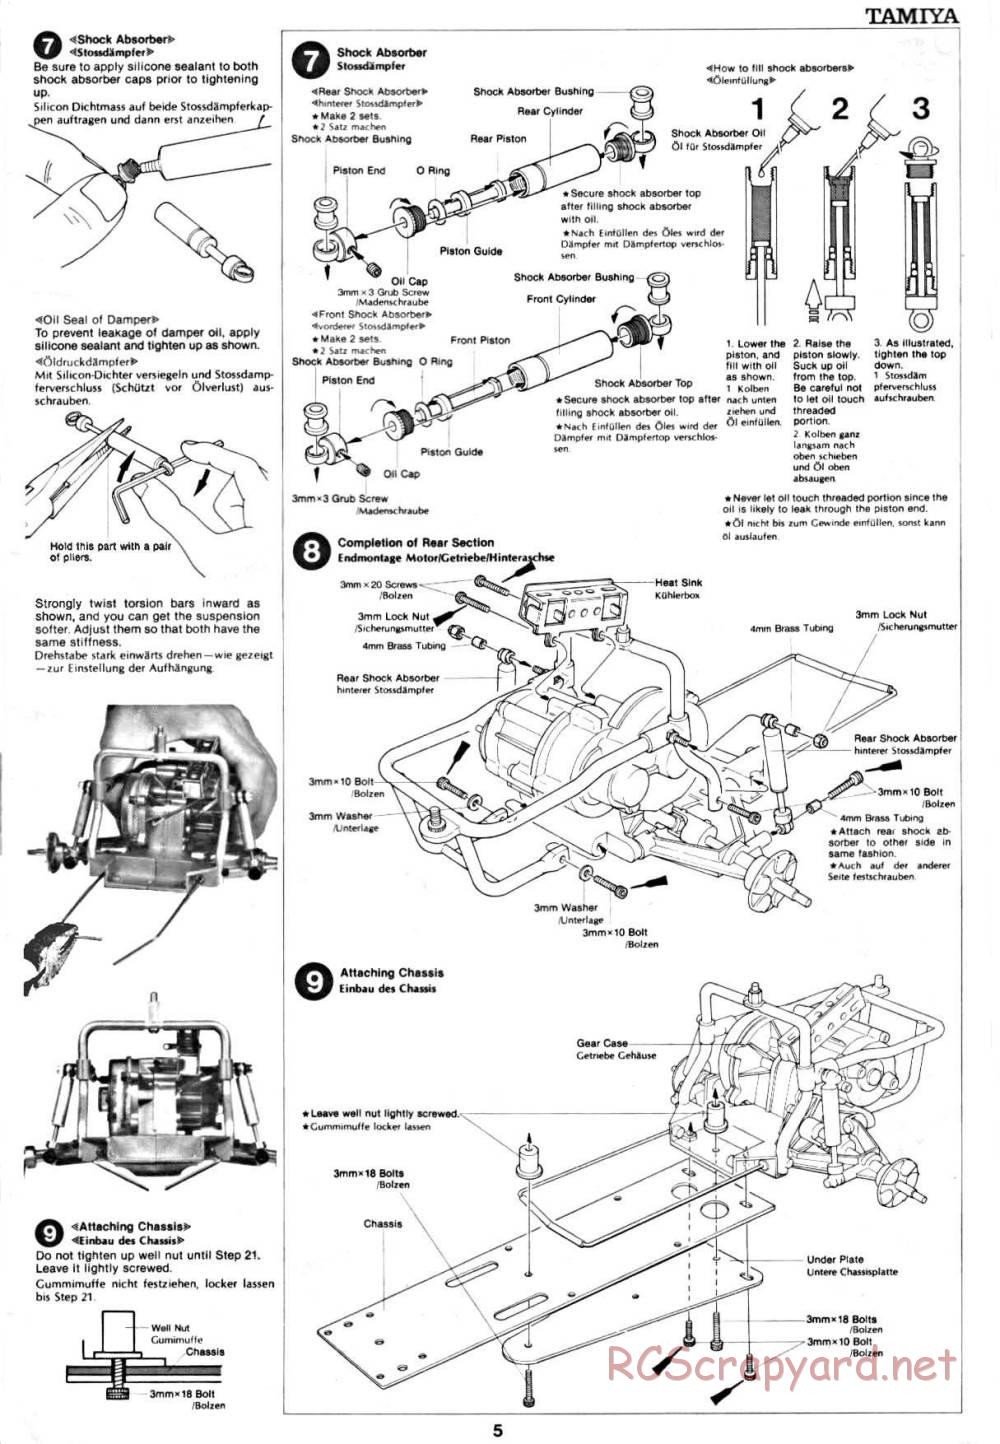 Tamiya - Ford F-150 Ranger XLT - 58027 - Manual - Page 5